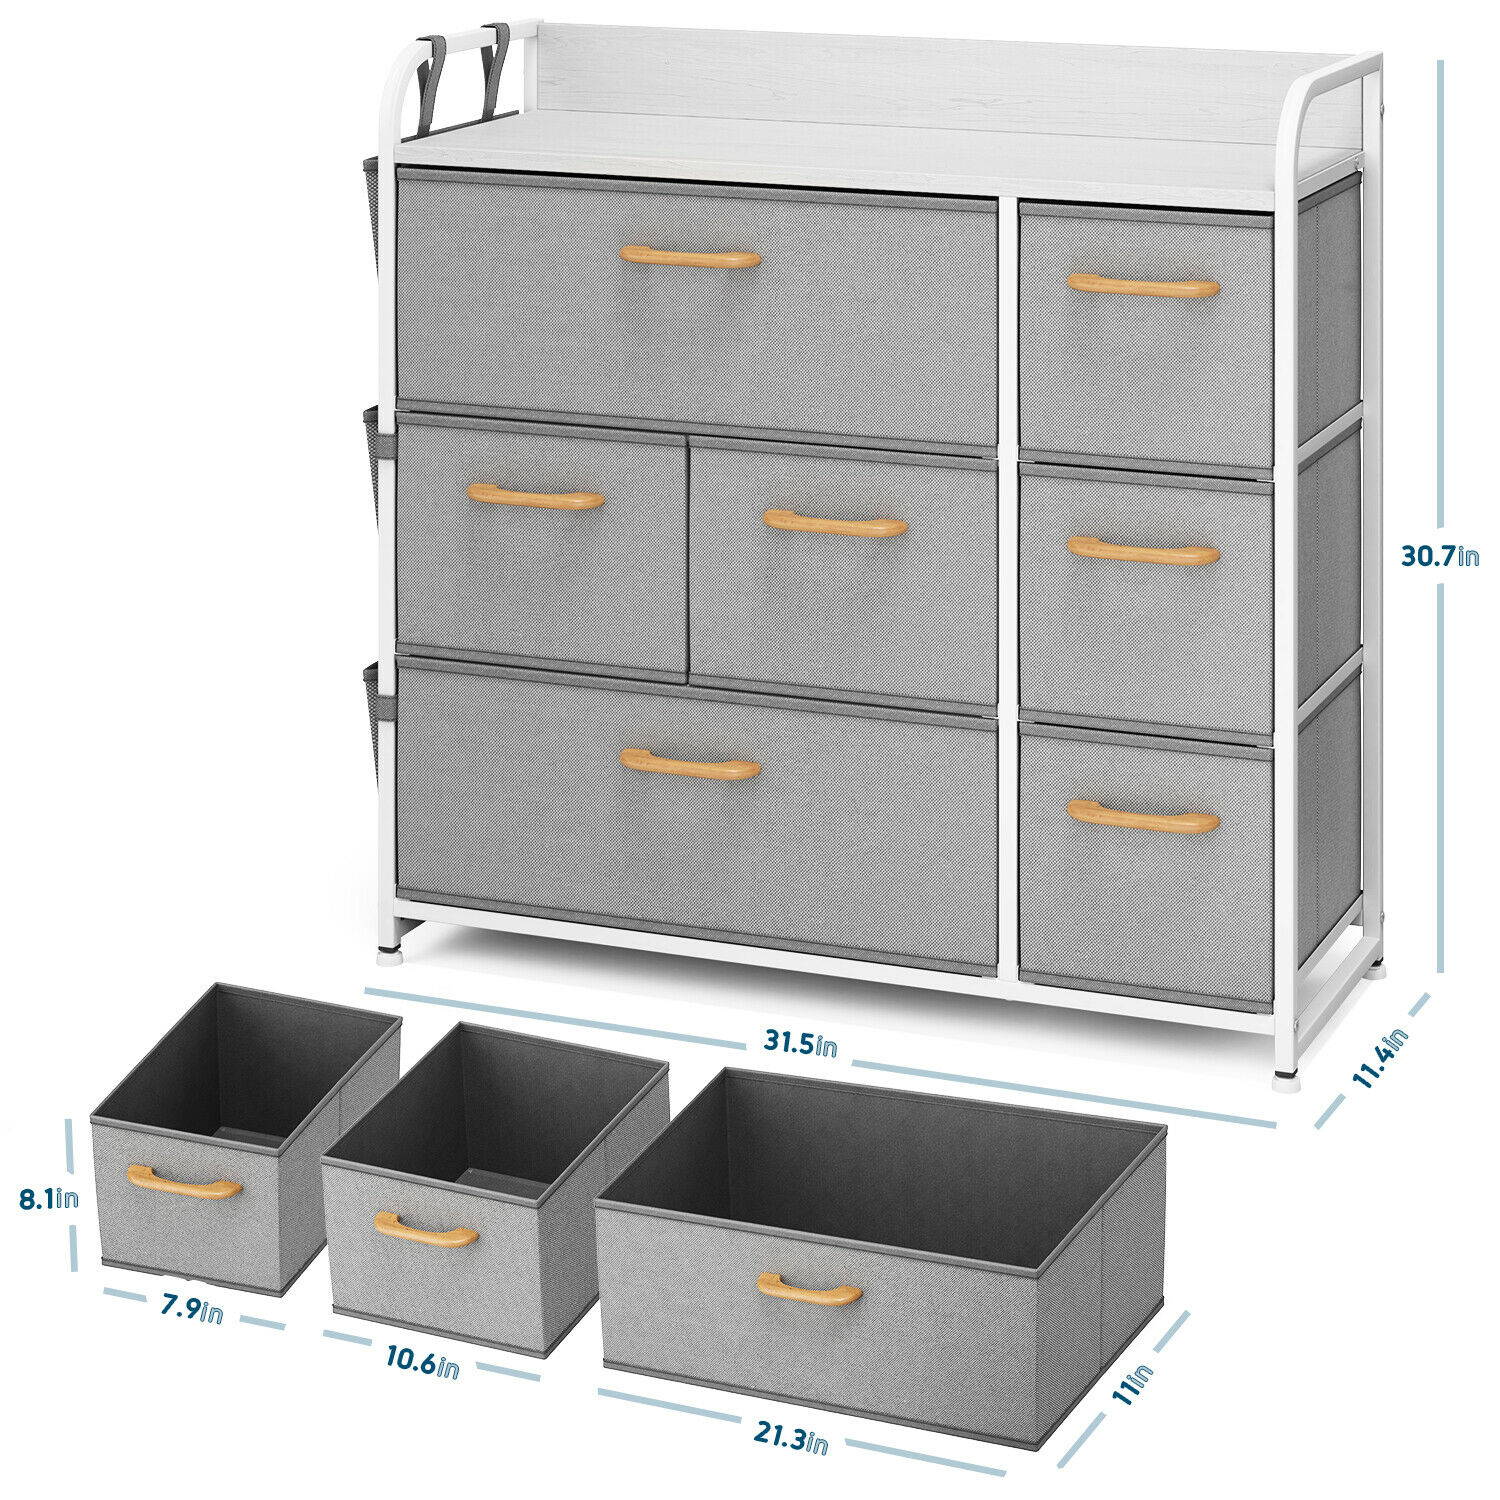 7 drawer fabric dresser dimensions